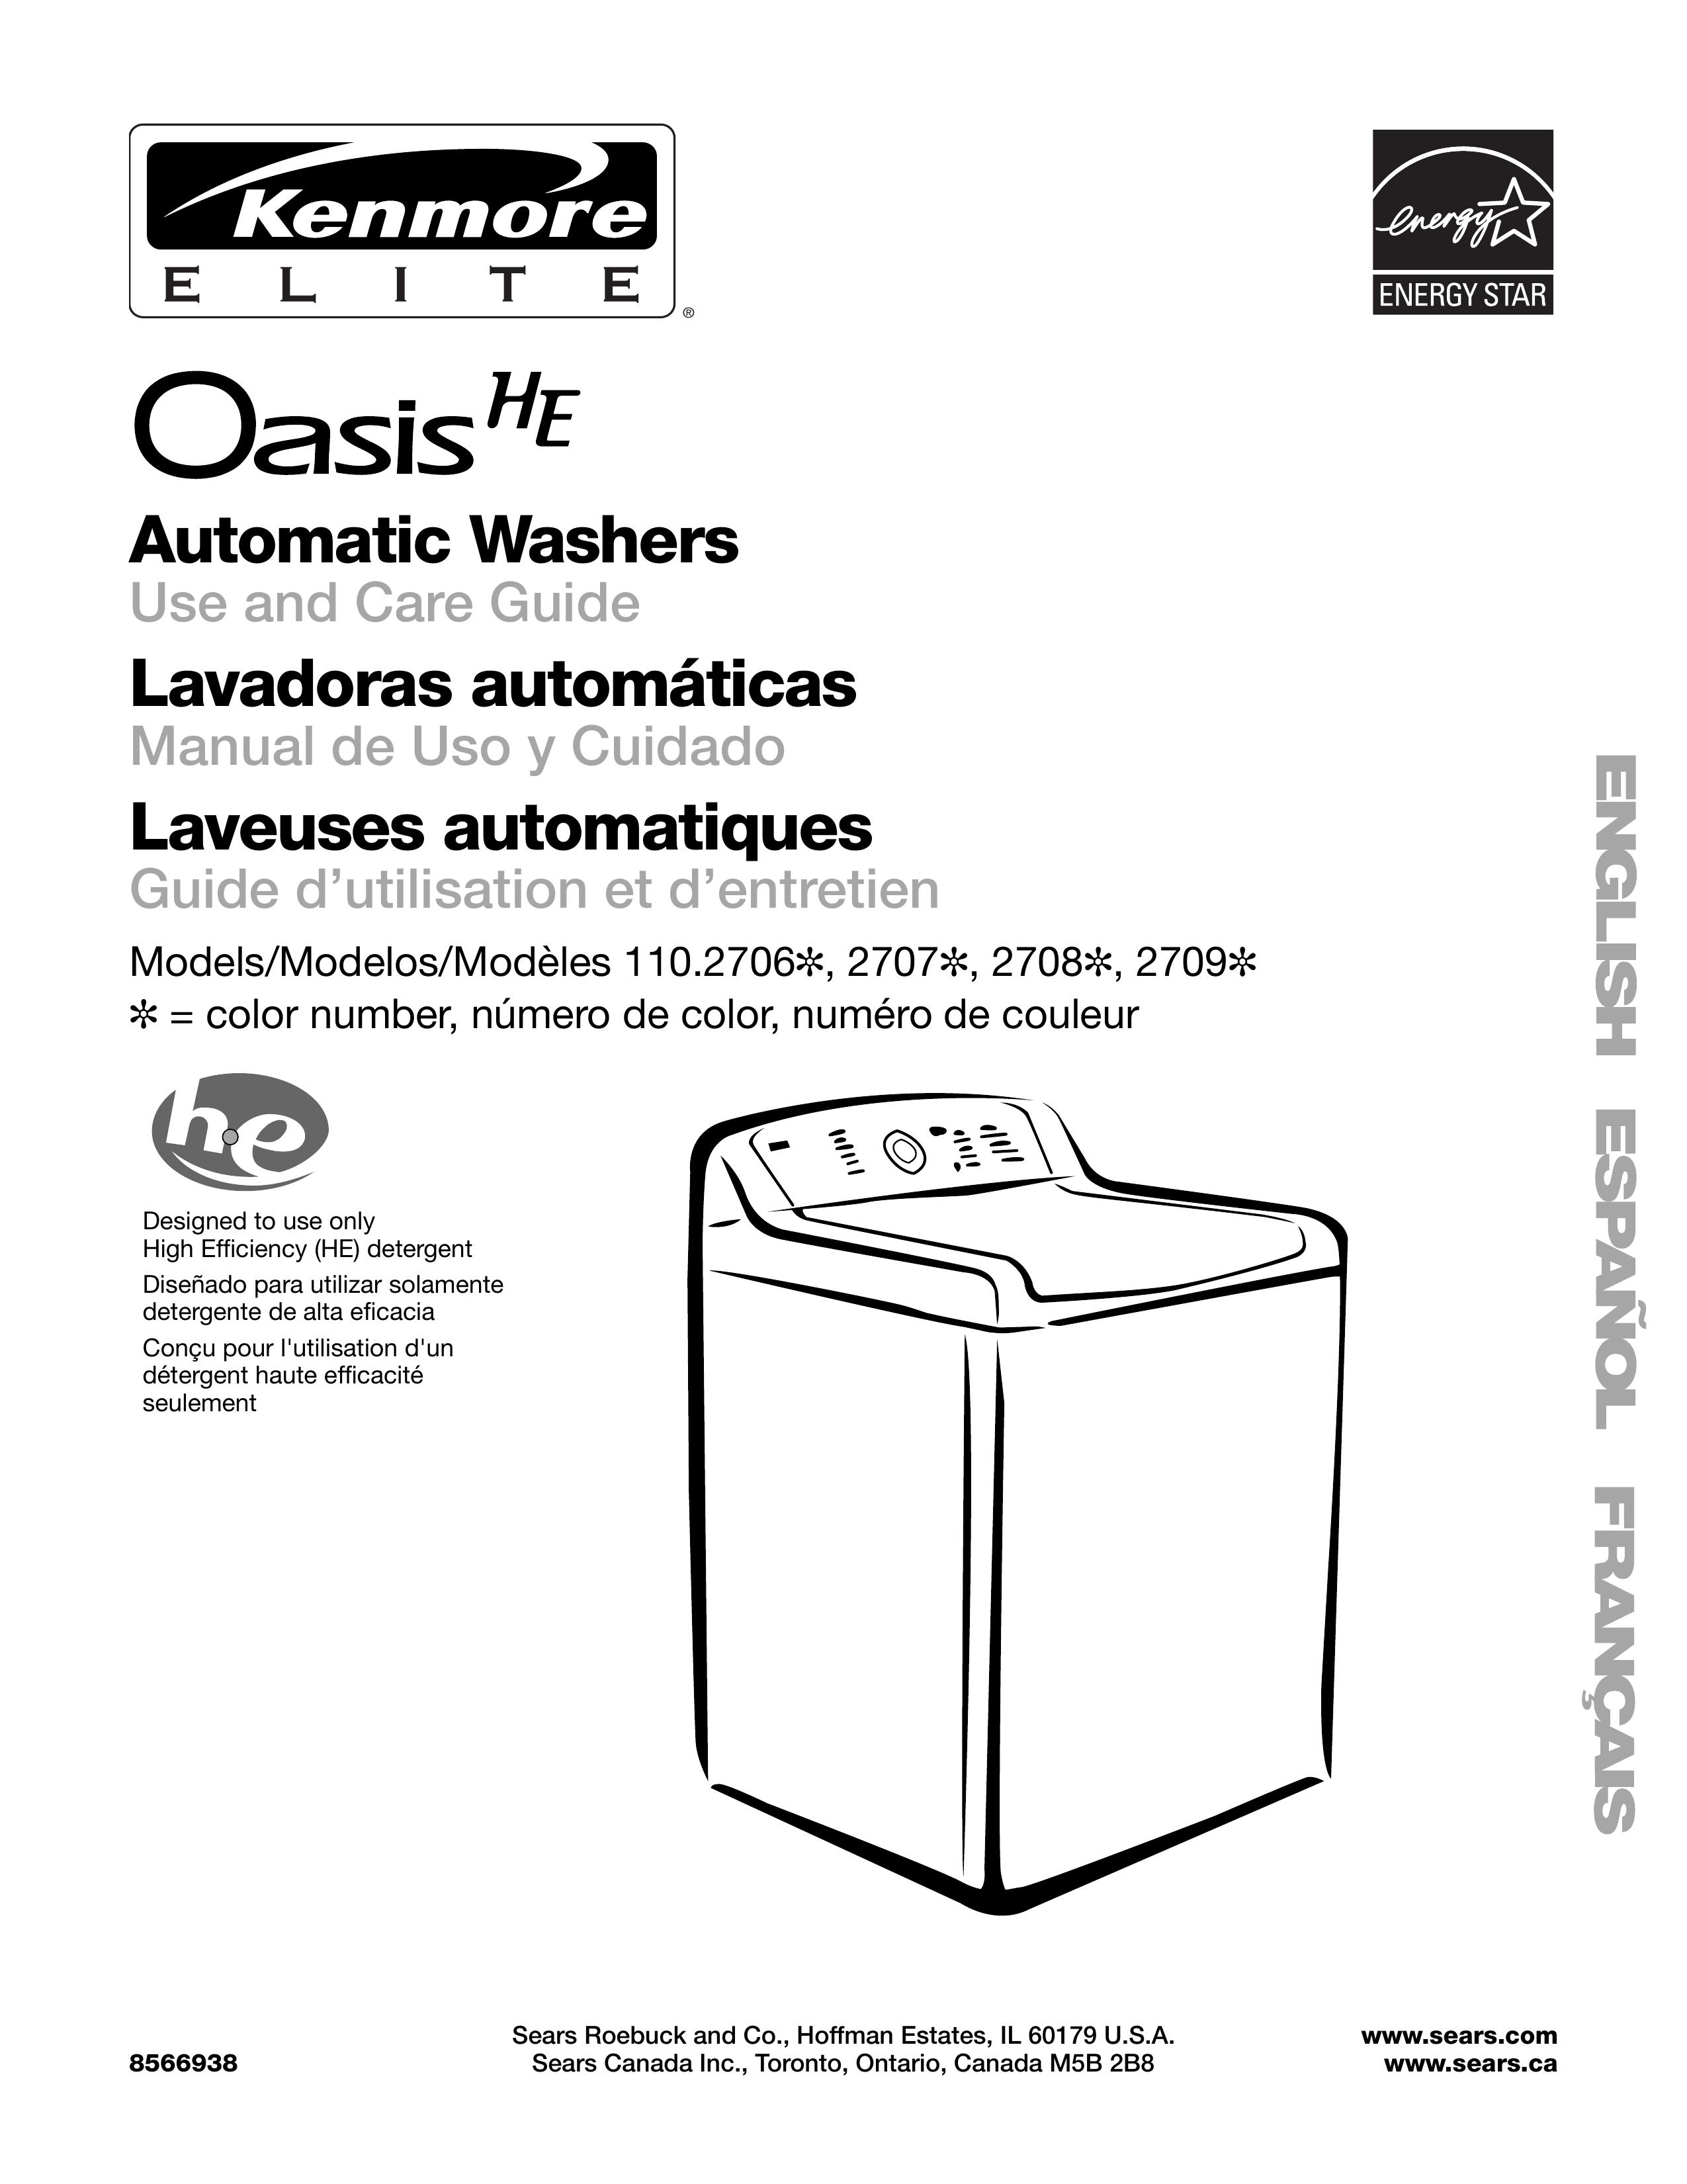 Kenmore 2707 Washer/Dryer User Manual